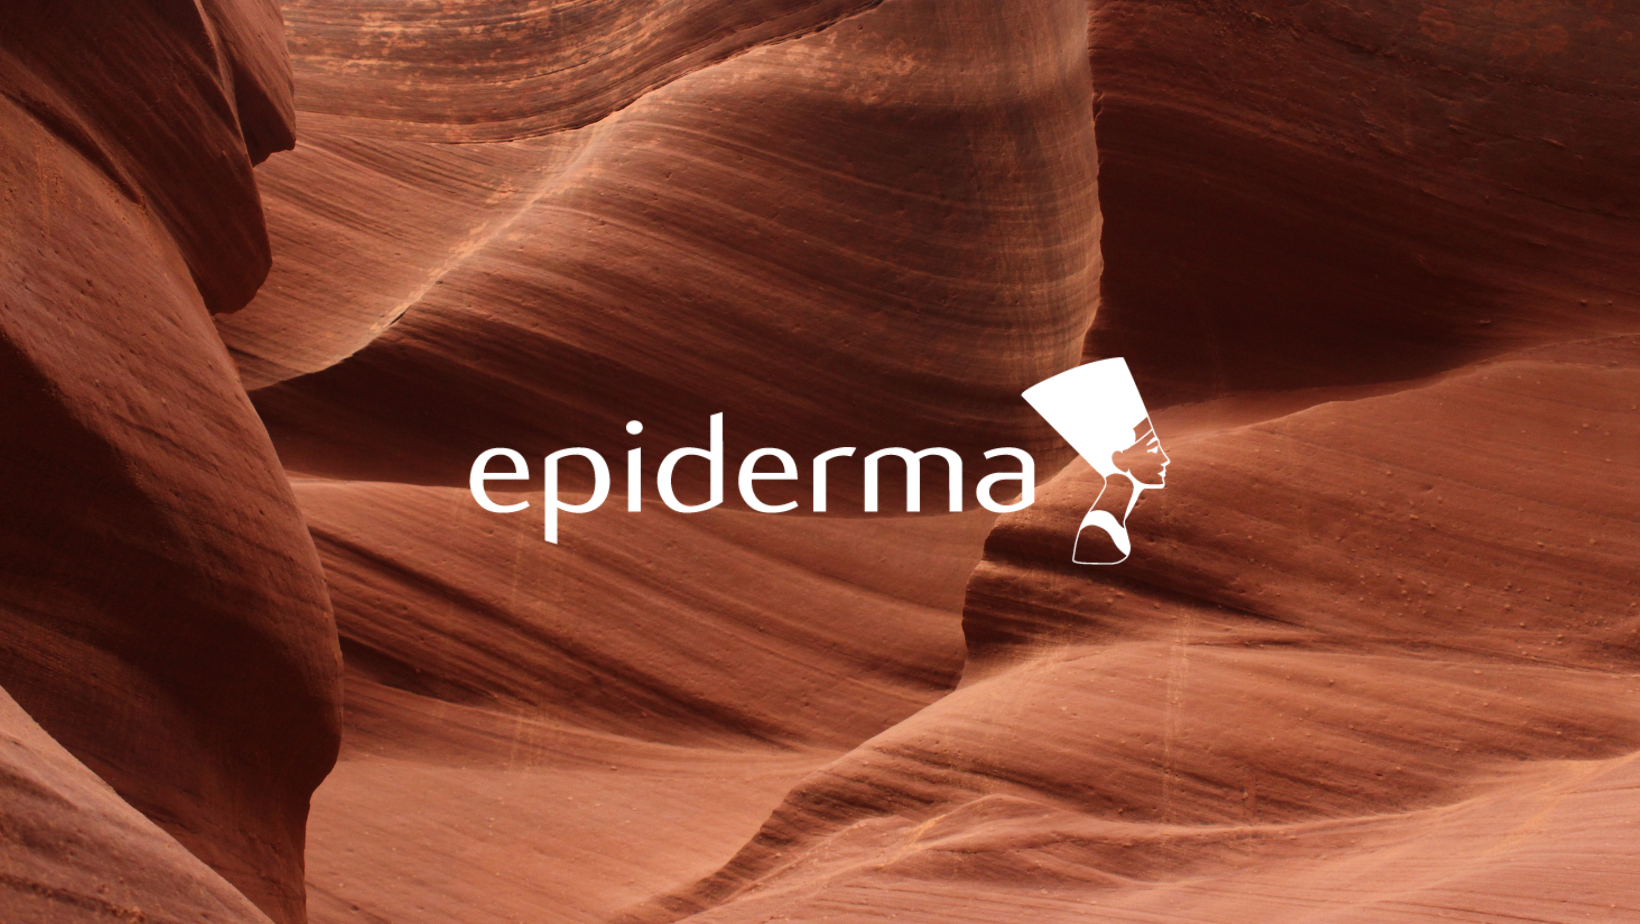 Epiderma - Skin Care Service